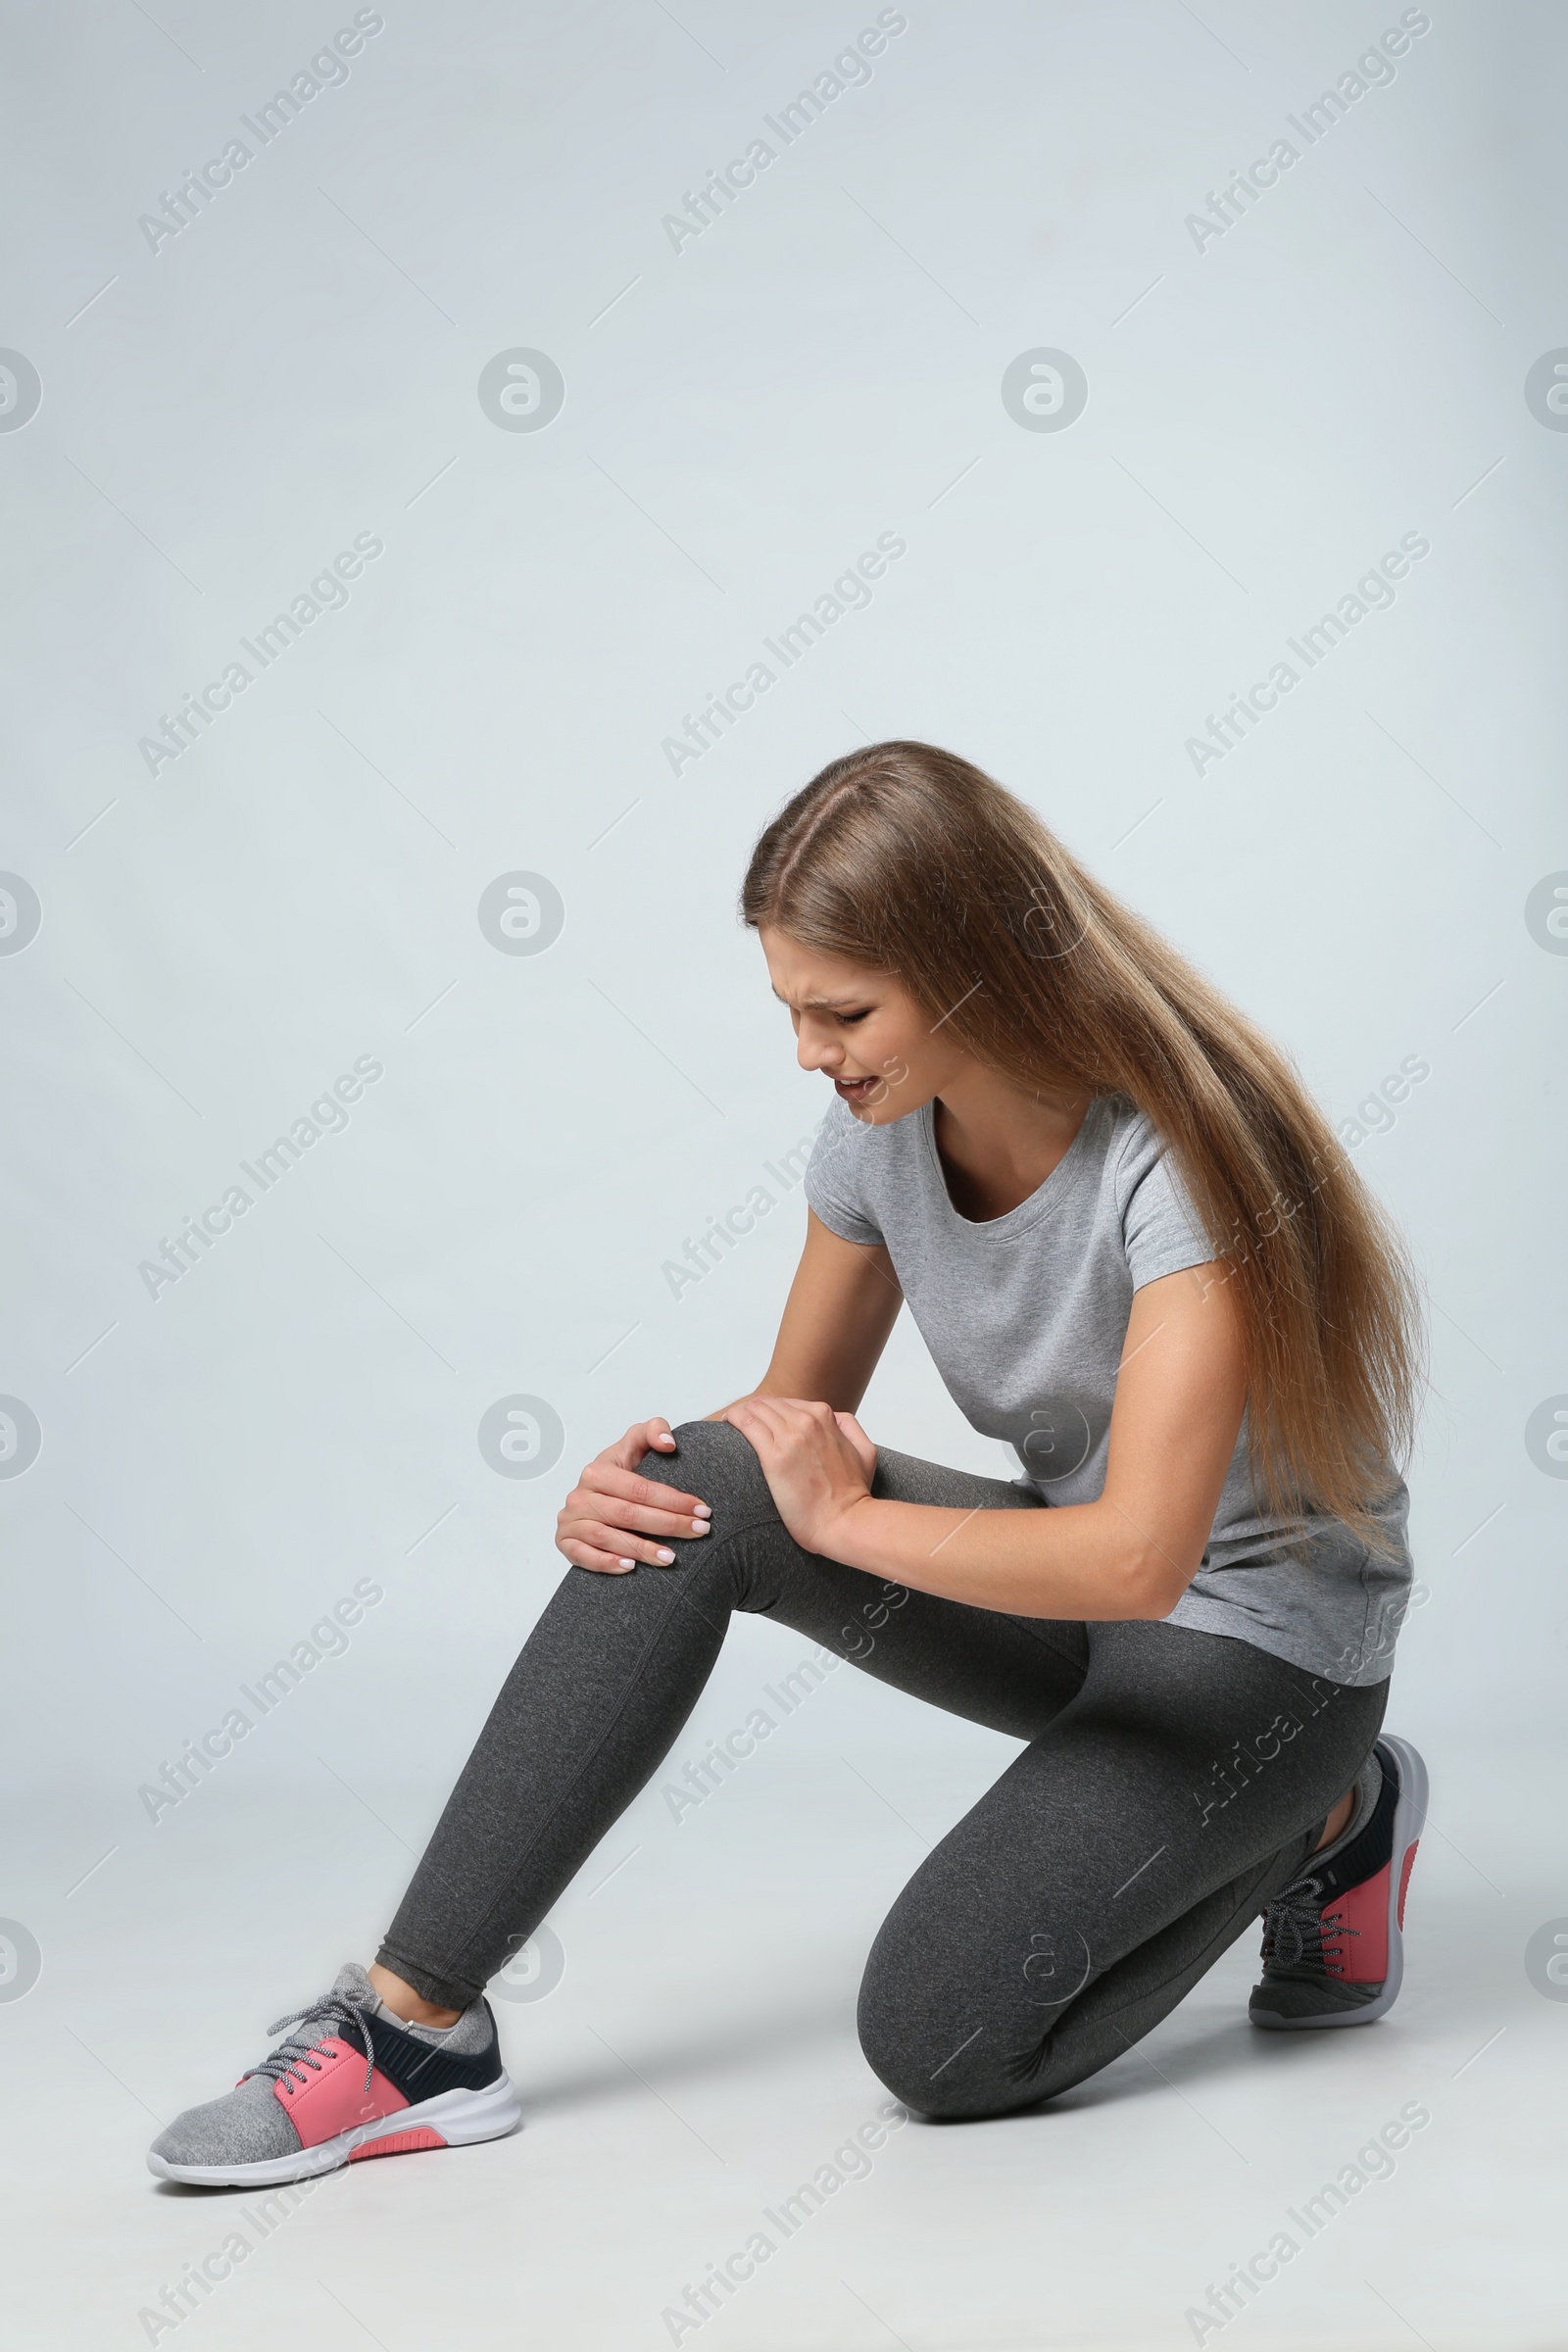 Photo of Full length portrait of sportswoman having knee problems on grey background